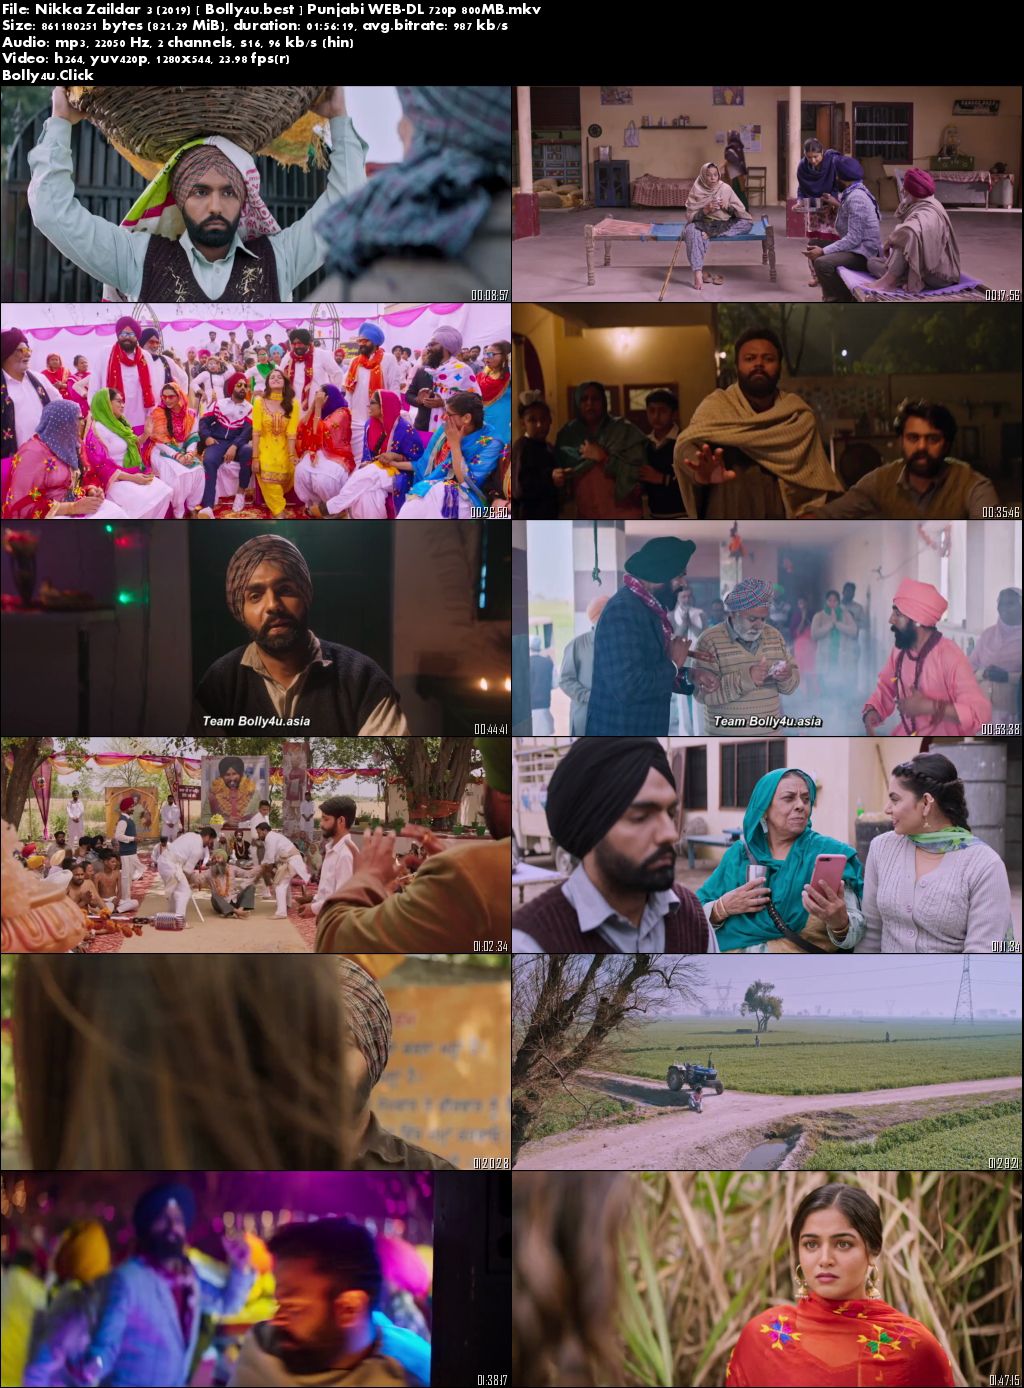 Nikka Zaildar 3 2019 WEB-DL 800Mb Punjabi 720p Download